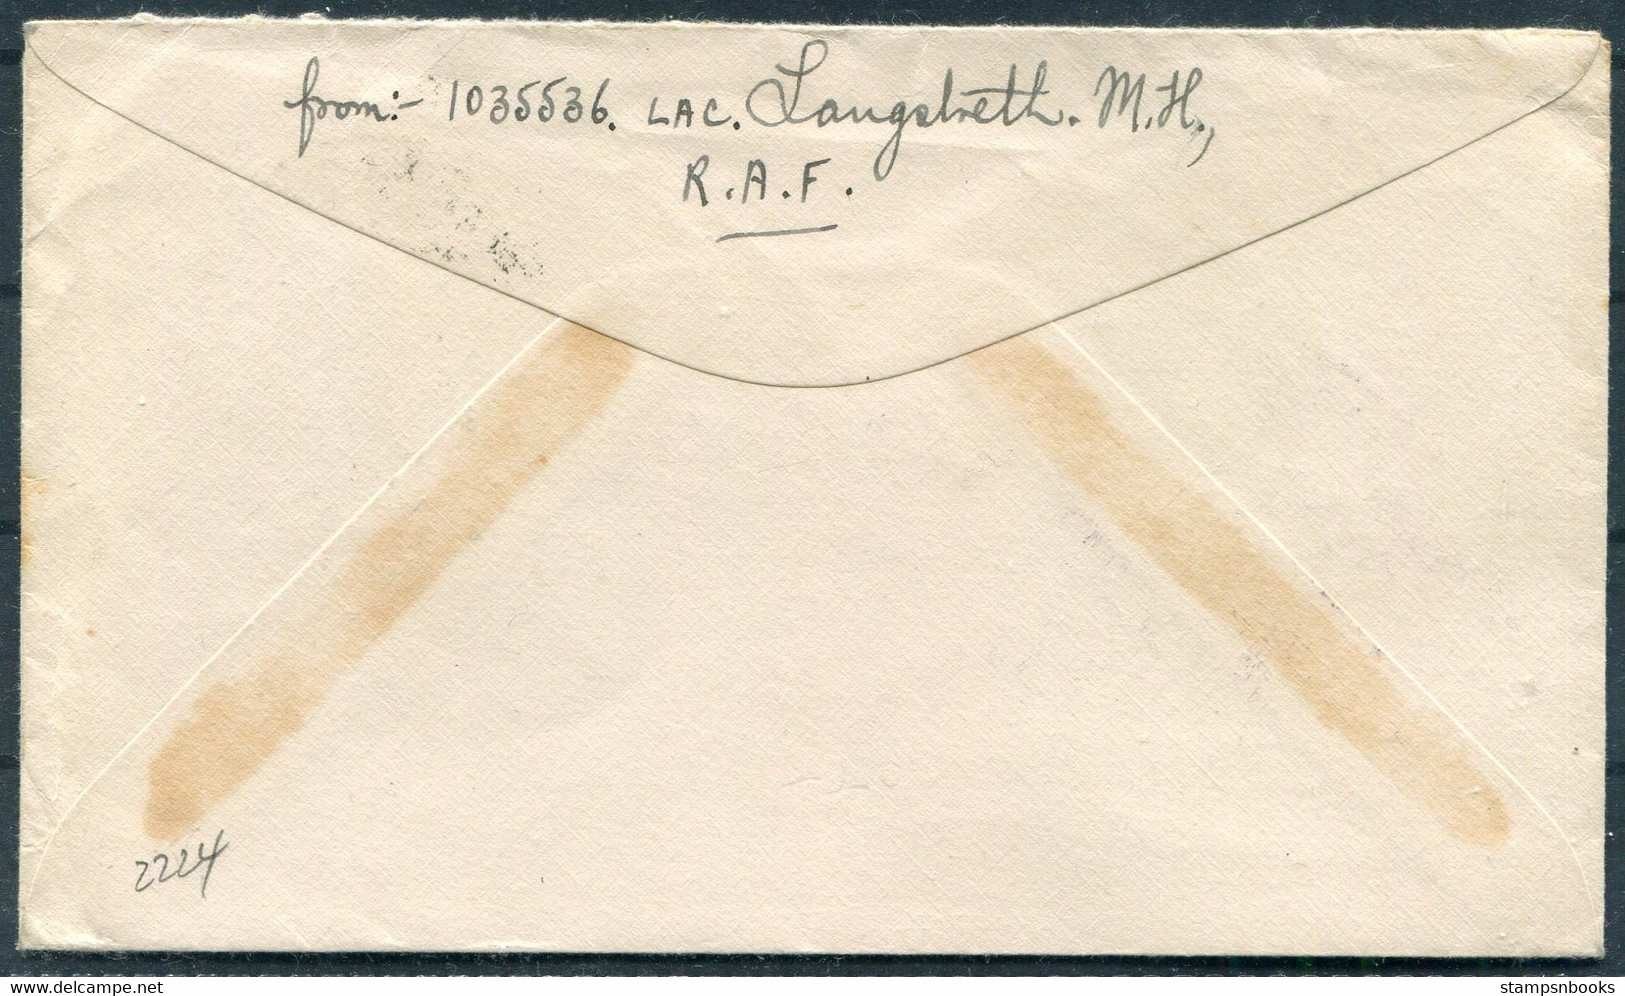 1942 (Nov 7th) Iceland Field Post Office 526, RAF Censor FPO Cover - Observer Cigerette Fund, Rochdale Lancashire - Storia Postale